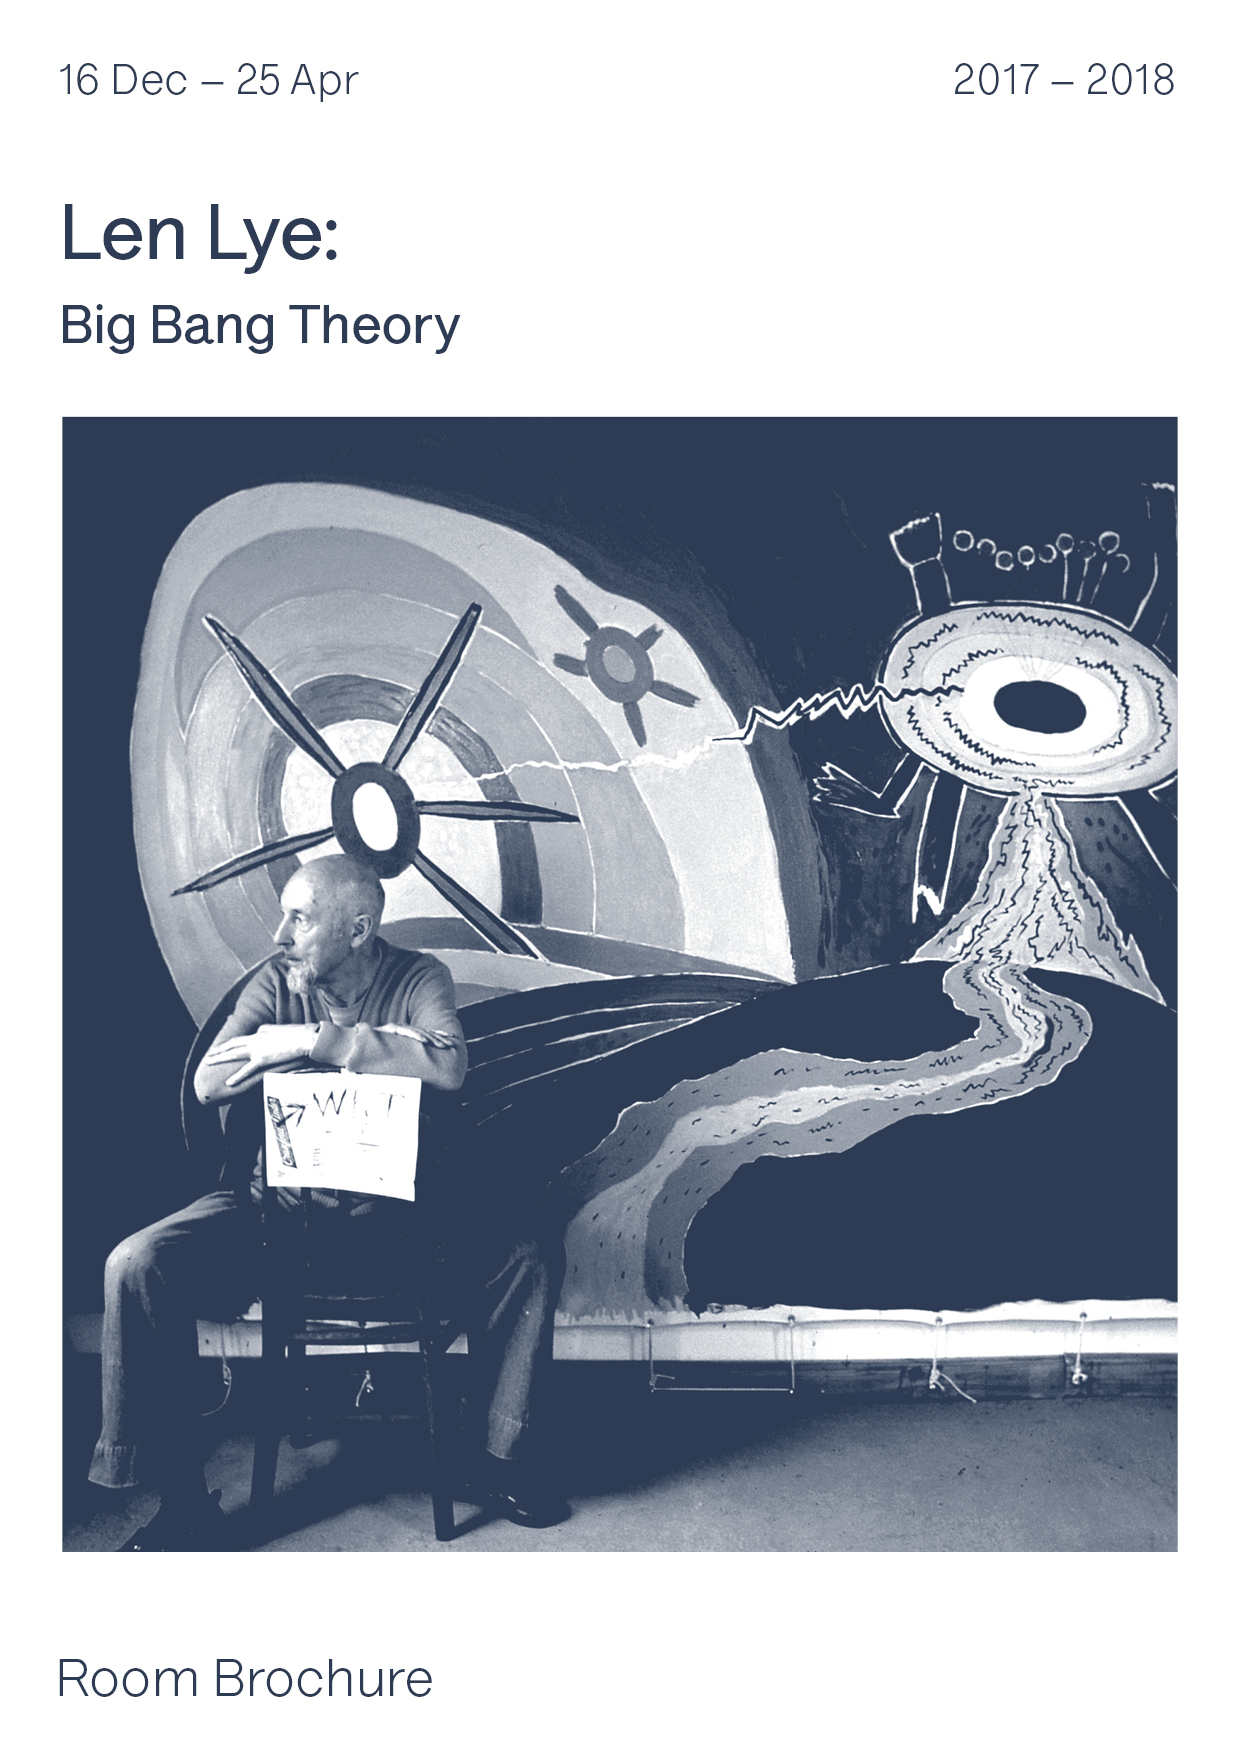 2017 Len Lye Big Bang Theory